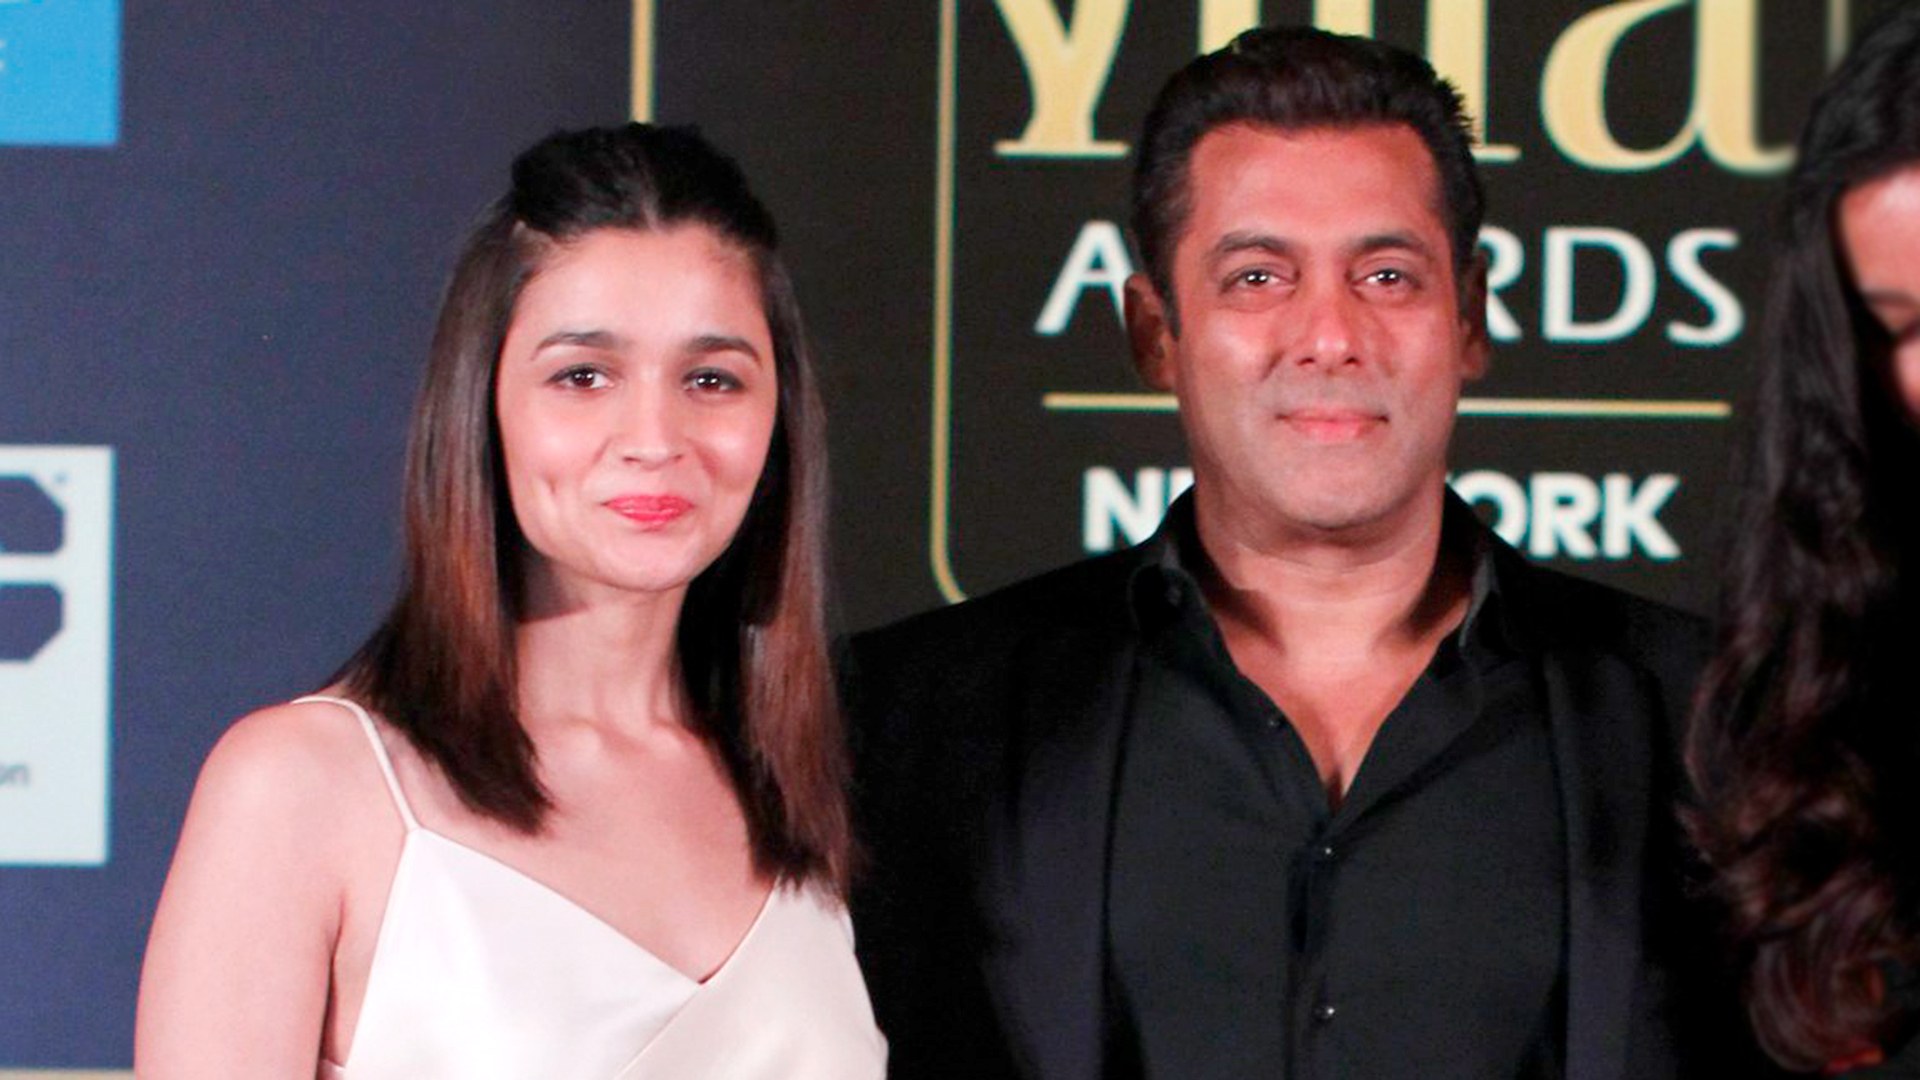 Salman Khan and Alia Bhatt's film was postponed - who was the film that was sad